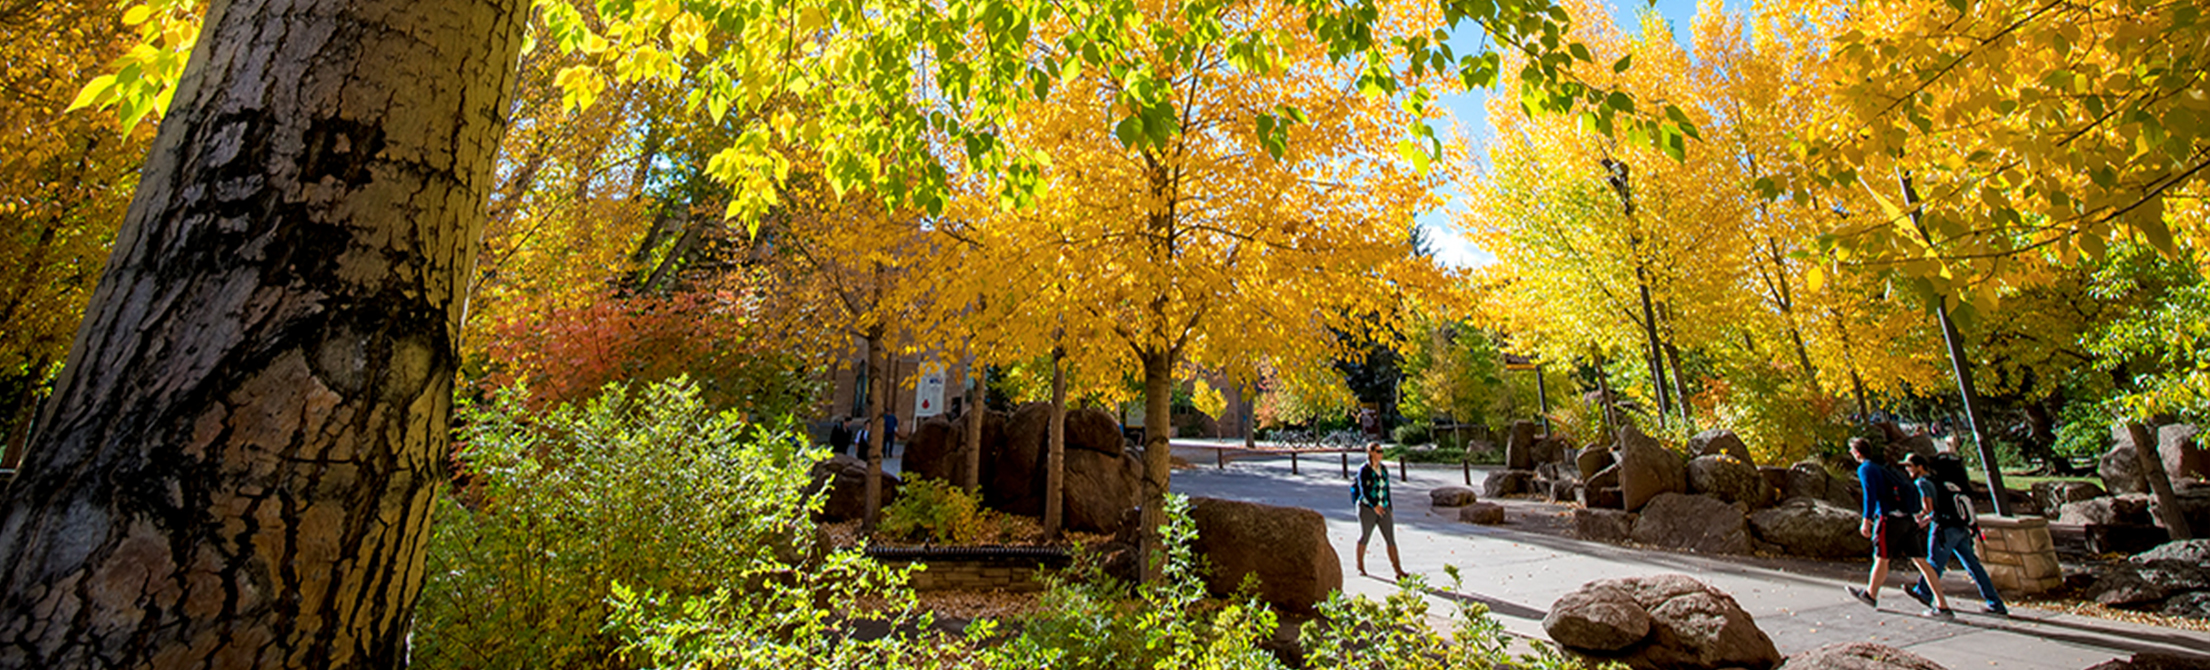 fall scene on campus 